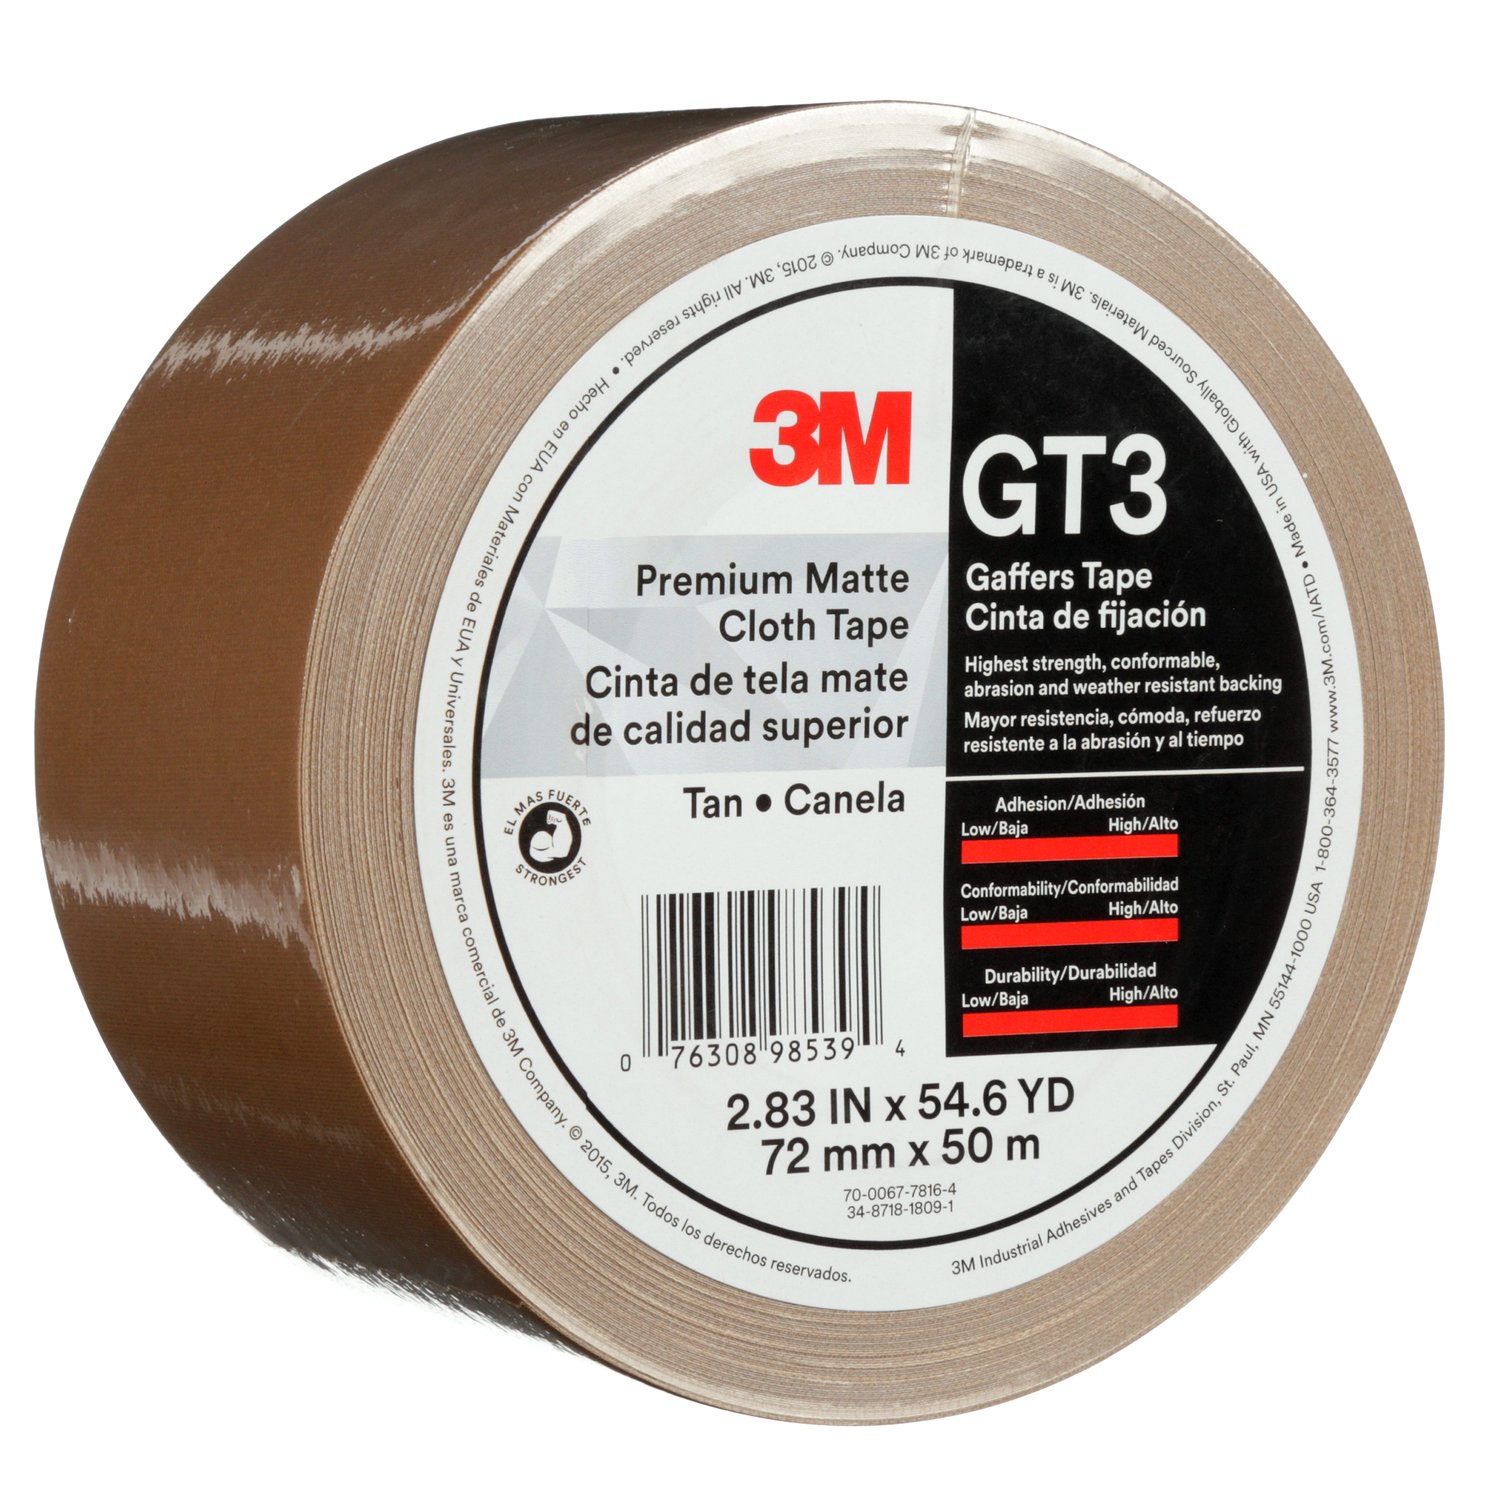 7010375525 - 3M Premium Matte Cloth (Gaffers) Tape GT3, Tan, 72 mm x 50 m, 11 mil,
16/Case